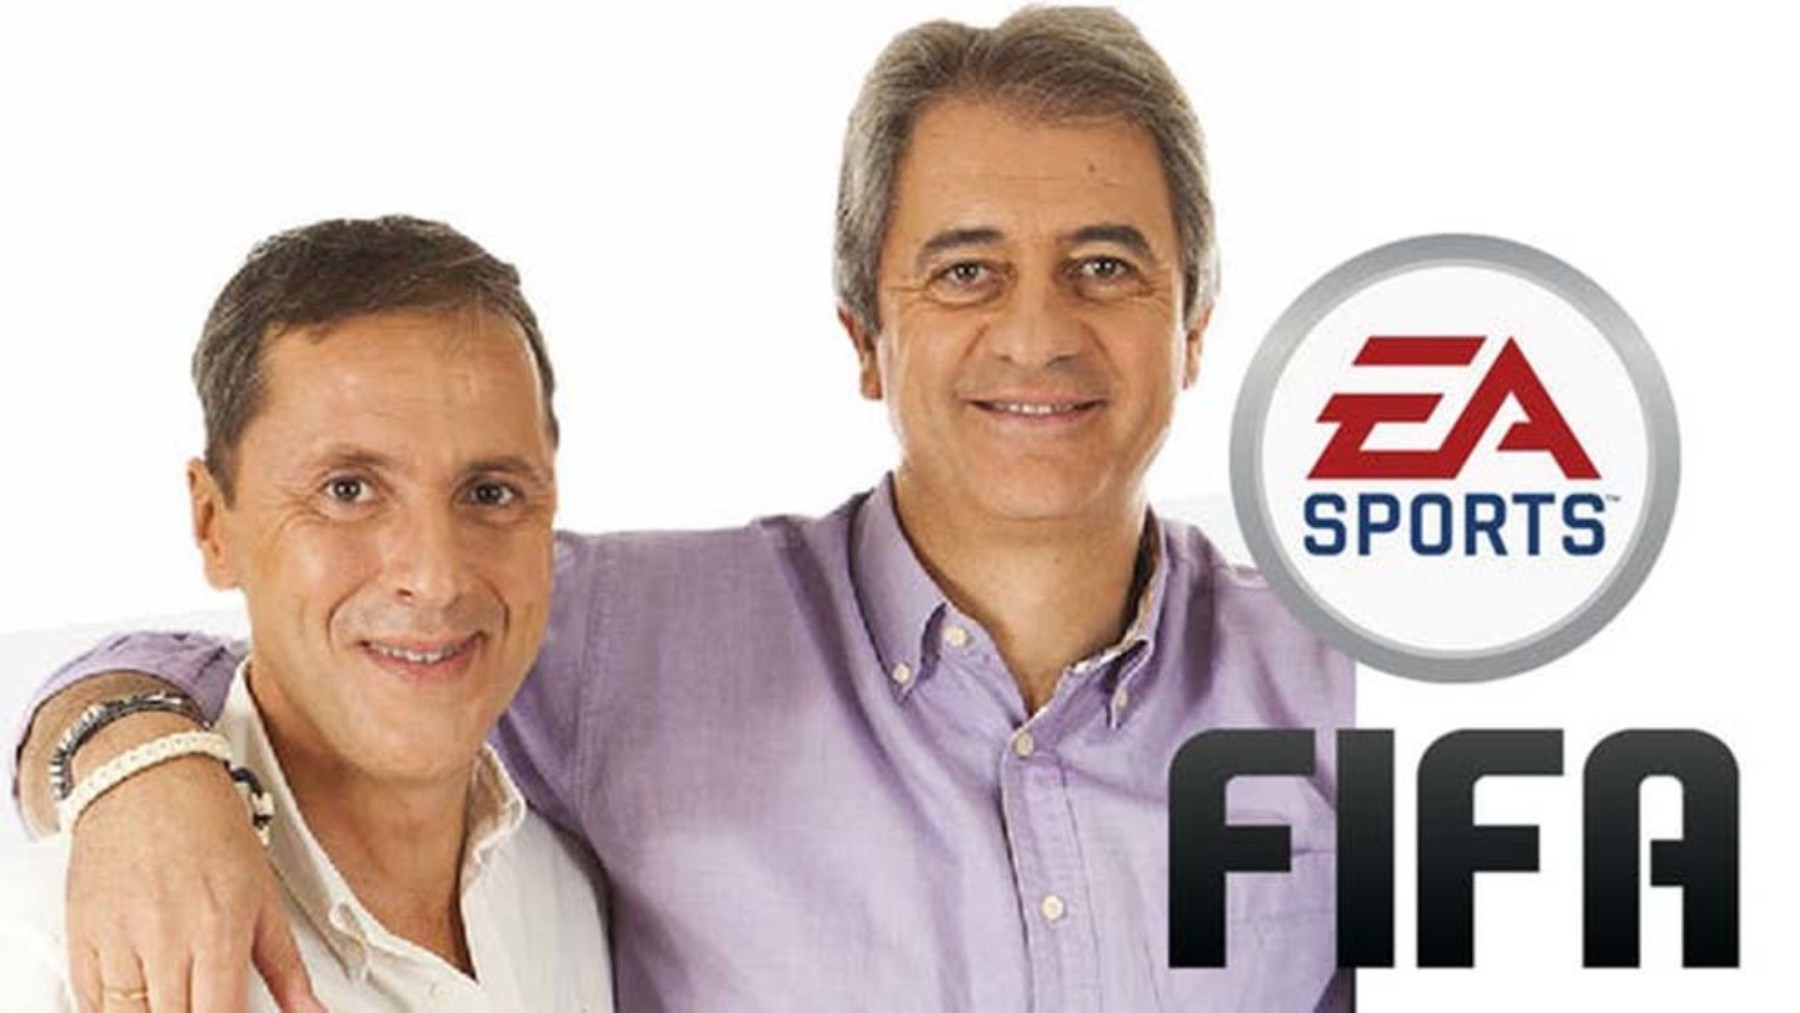 Manolo Lama y Paco González. (EA Sports)